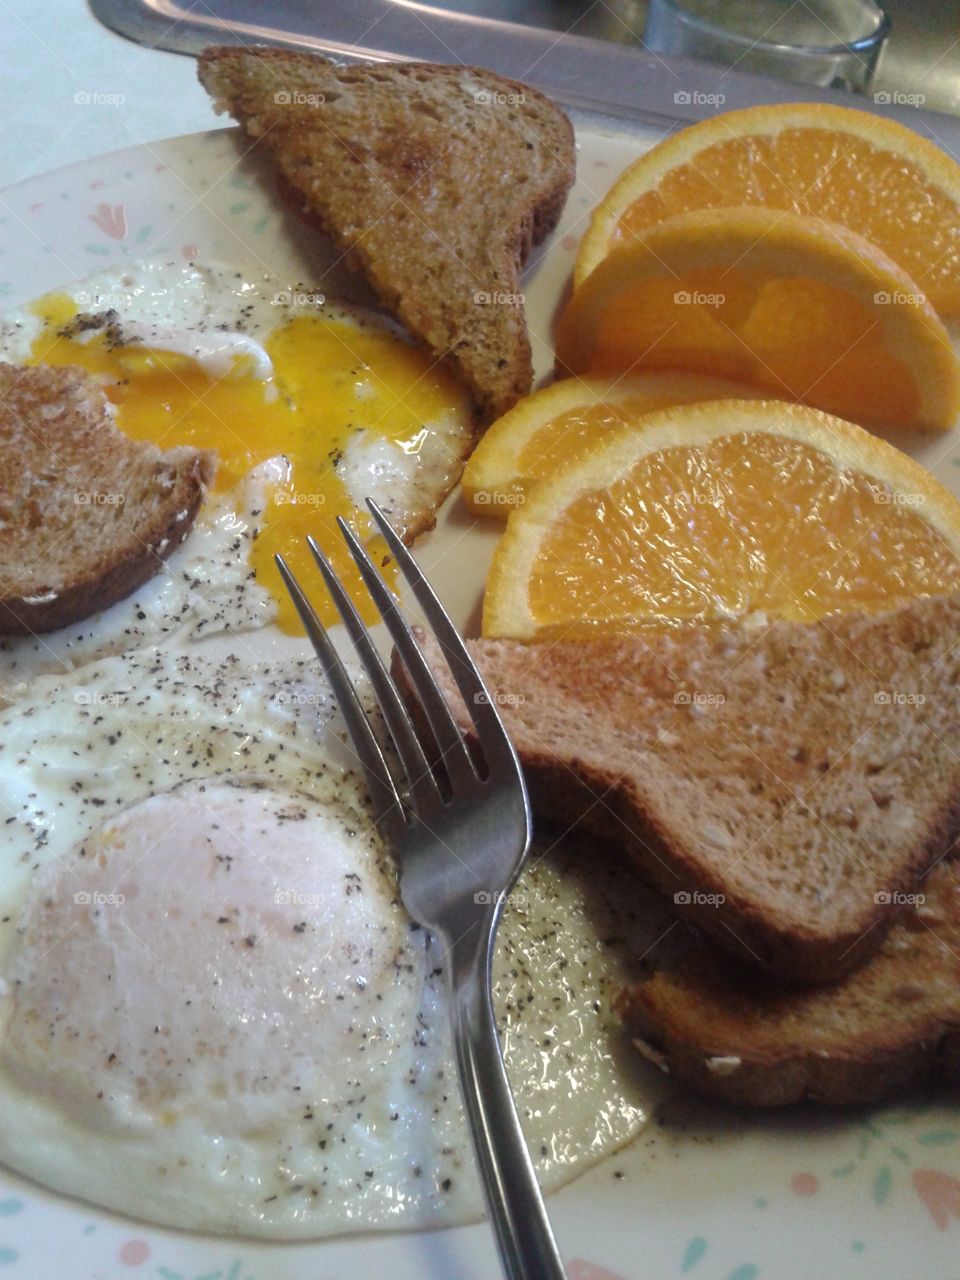 Quick breakfast. Eggs over light is my go to breakfast. Fresh orange slices finish the quick morning break.